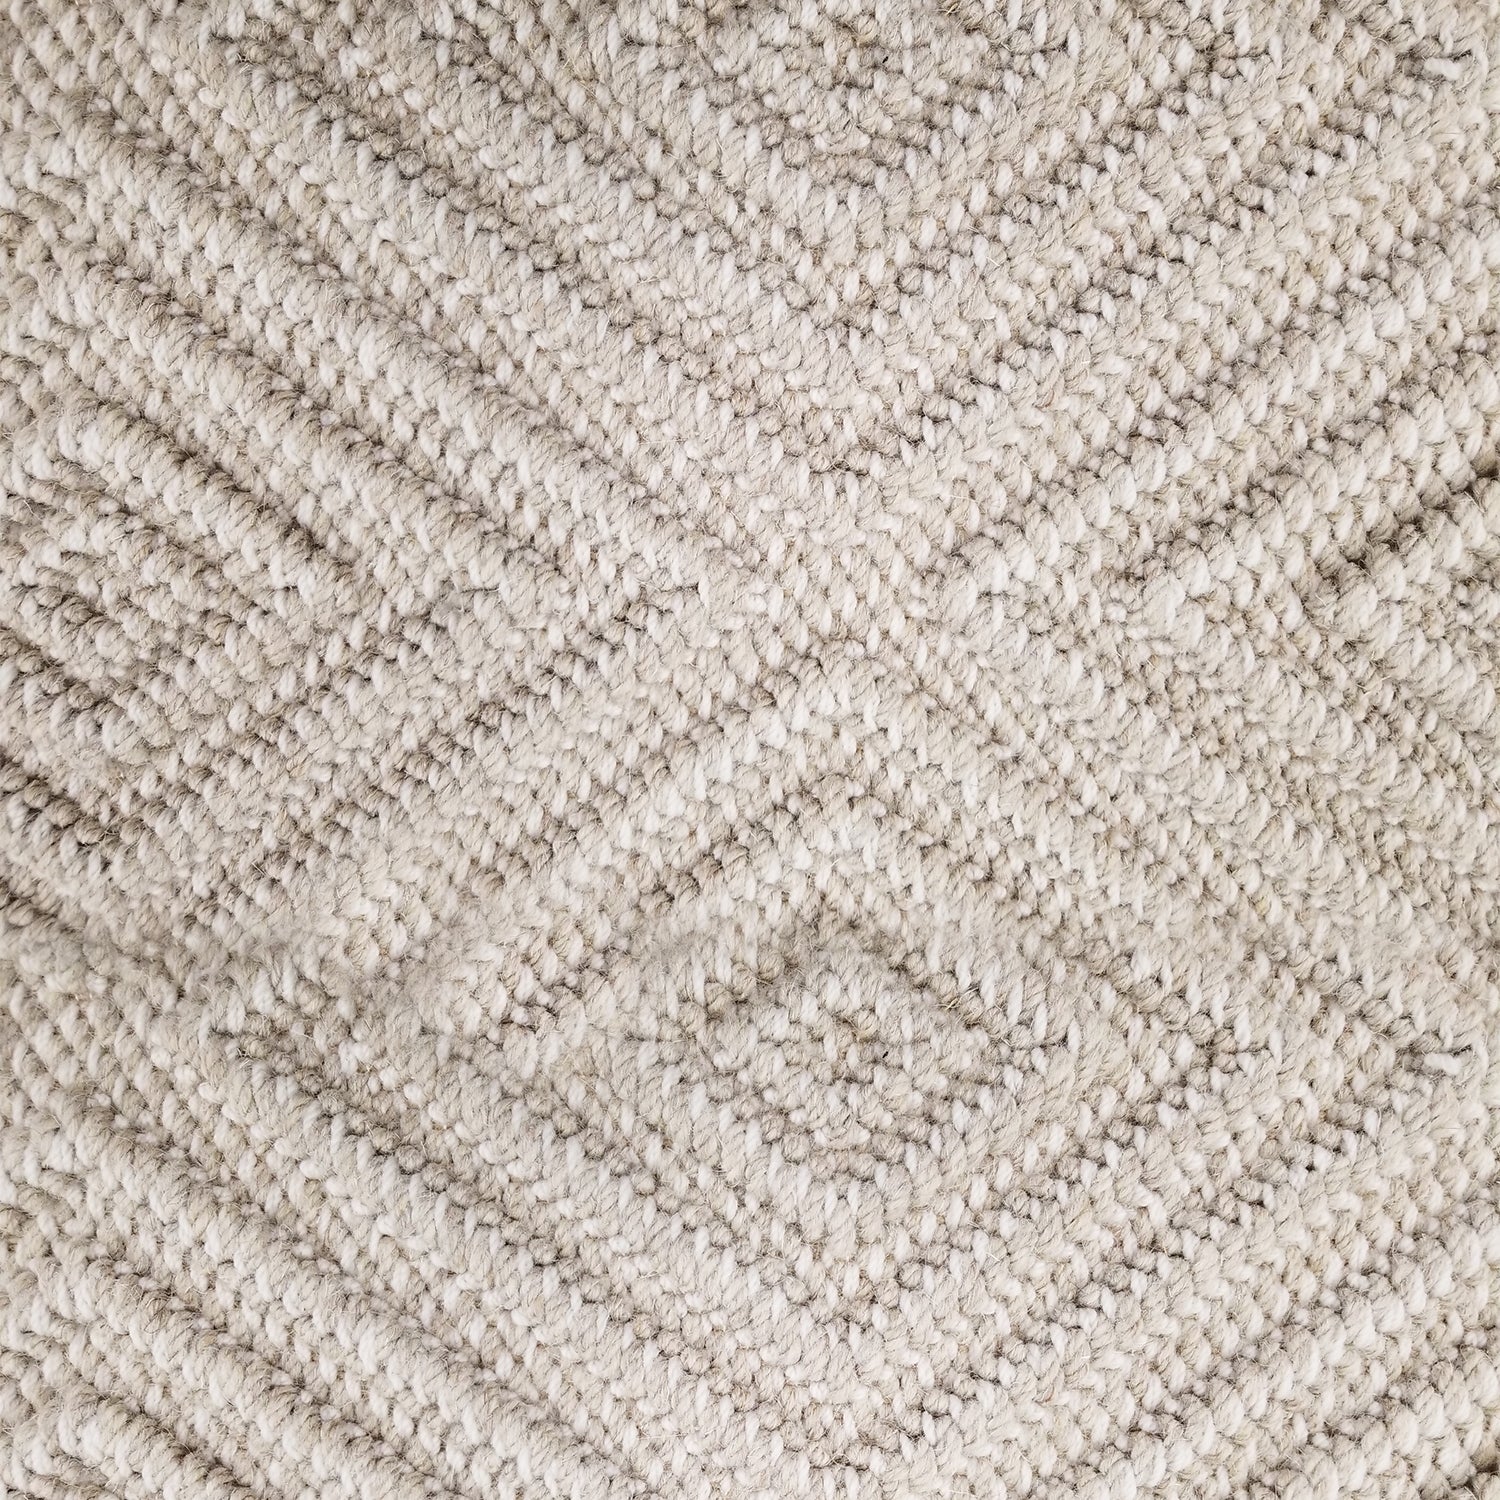 Wool broadloom carpet swatch woven in a dimensional diamond print in light silver.